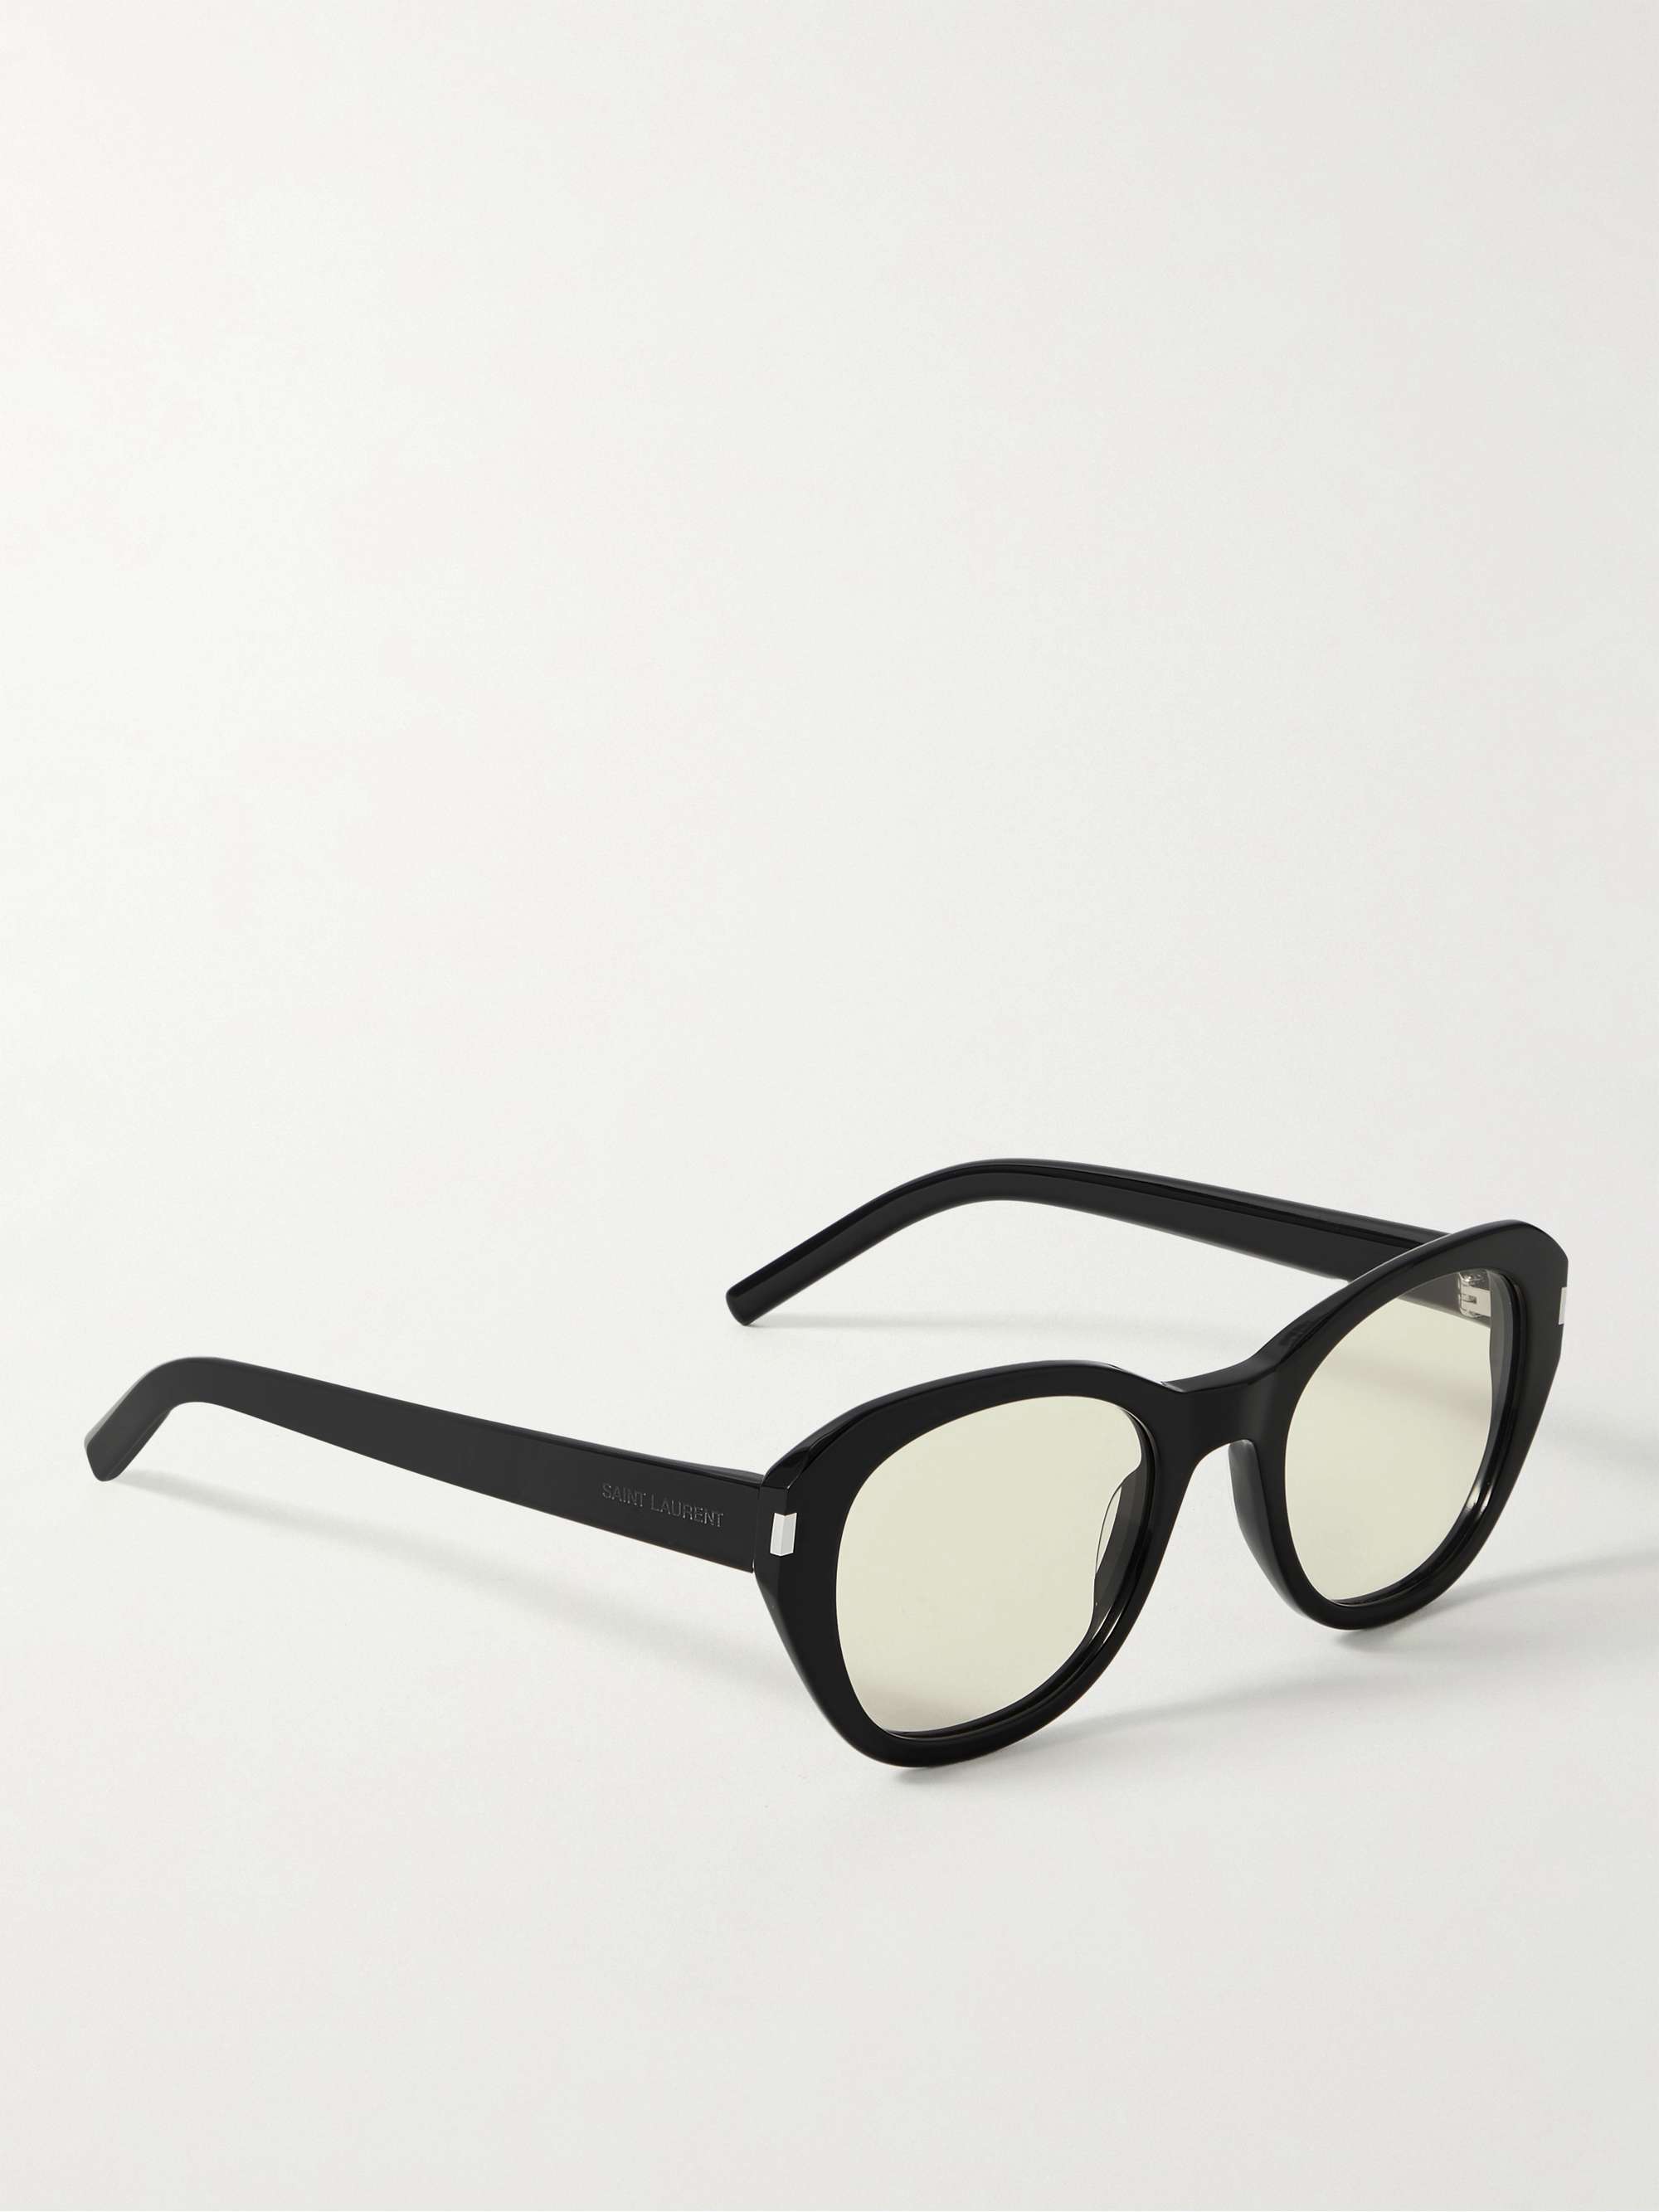 SAINT LAURENT EYEWEAR D-Frame Acetate Sunglasses